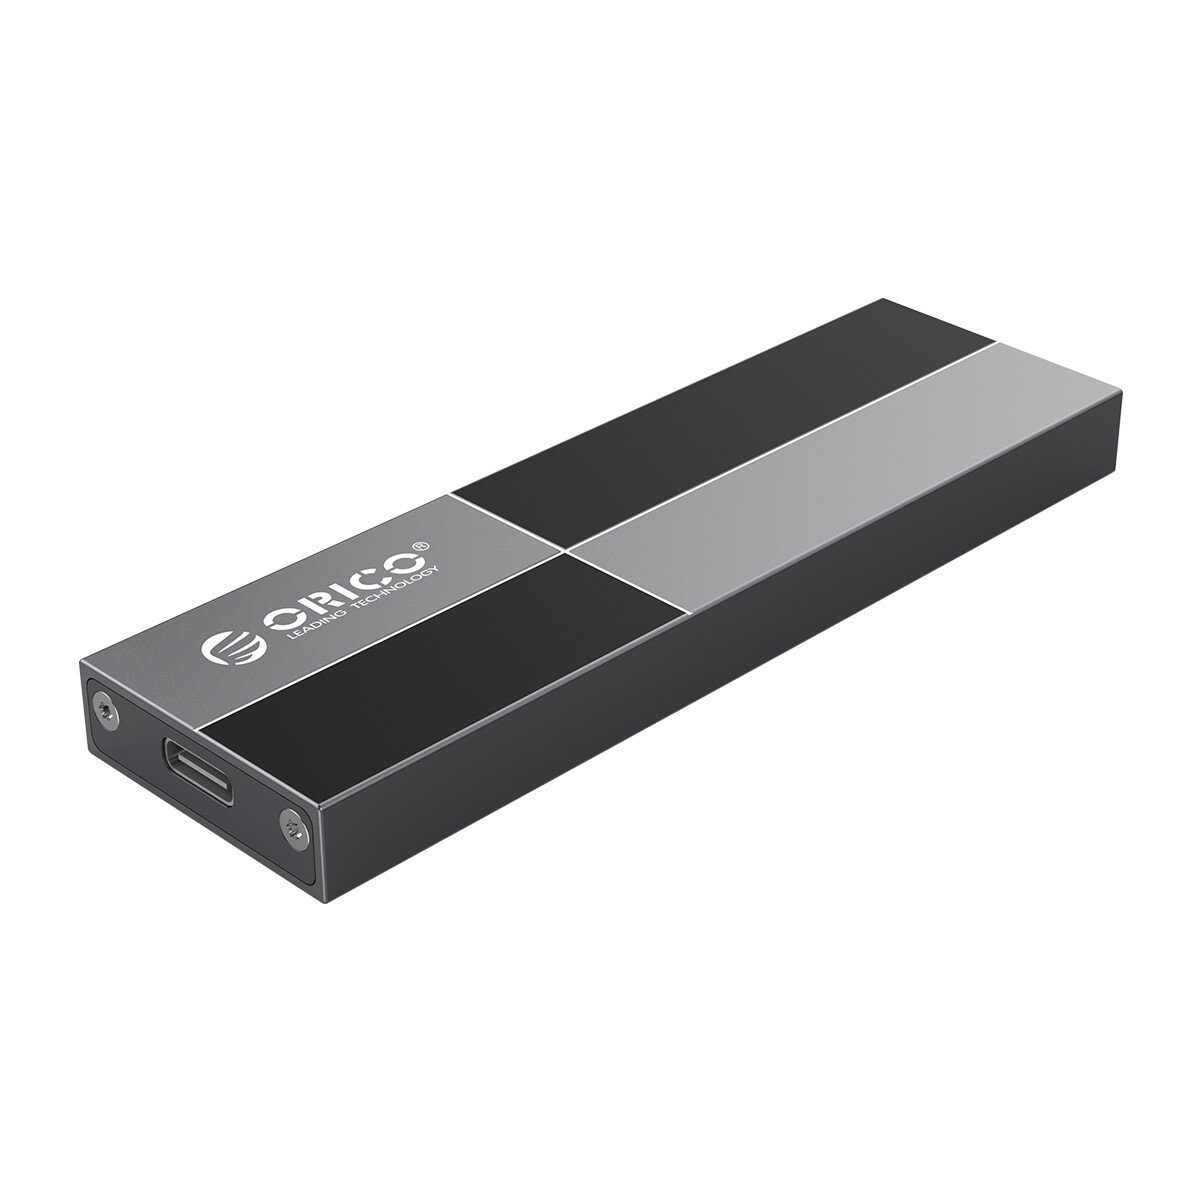 ORICO PFM2-C3 NVME M.2 SSD Enclosure 10Gbps USB3.1 Gen2 Solid State Drive Enclosure Case Hard Drive Disk Base